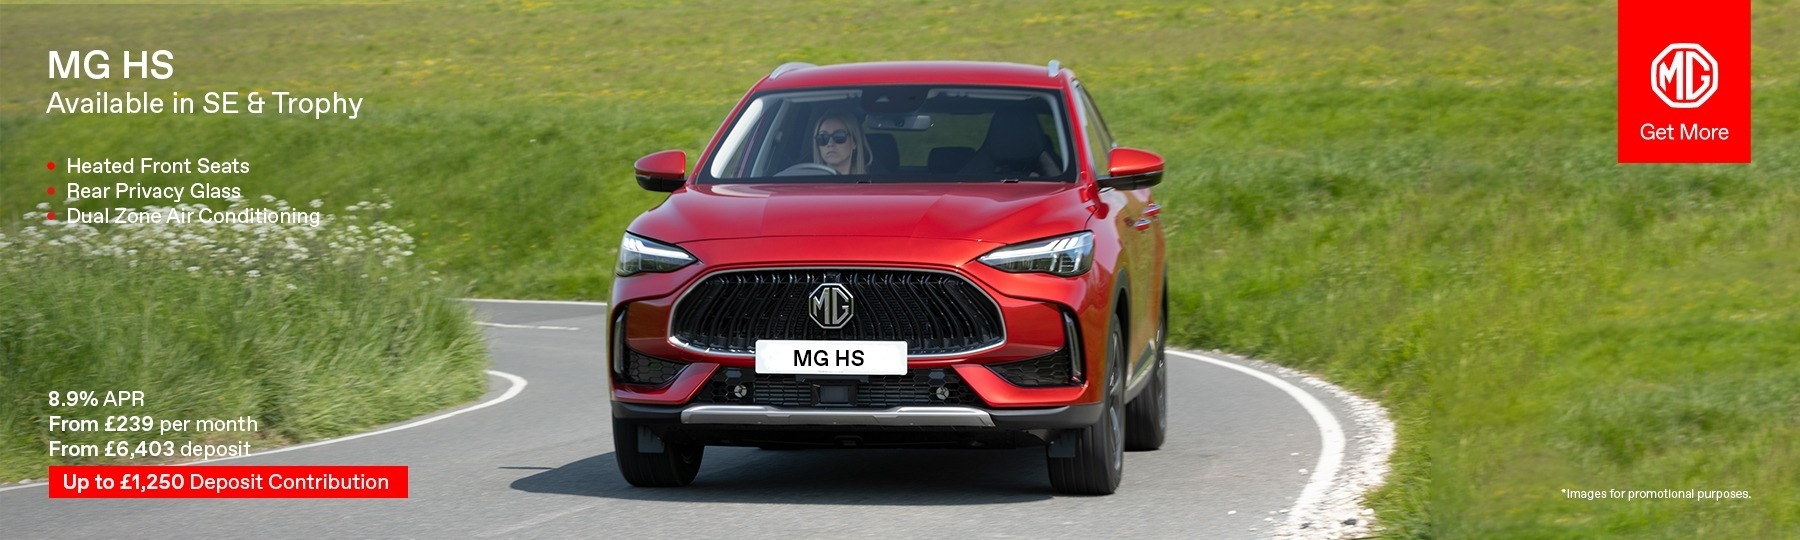 MG  New Car Offer